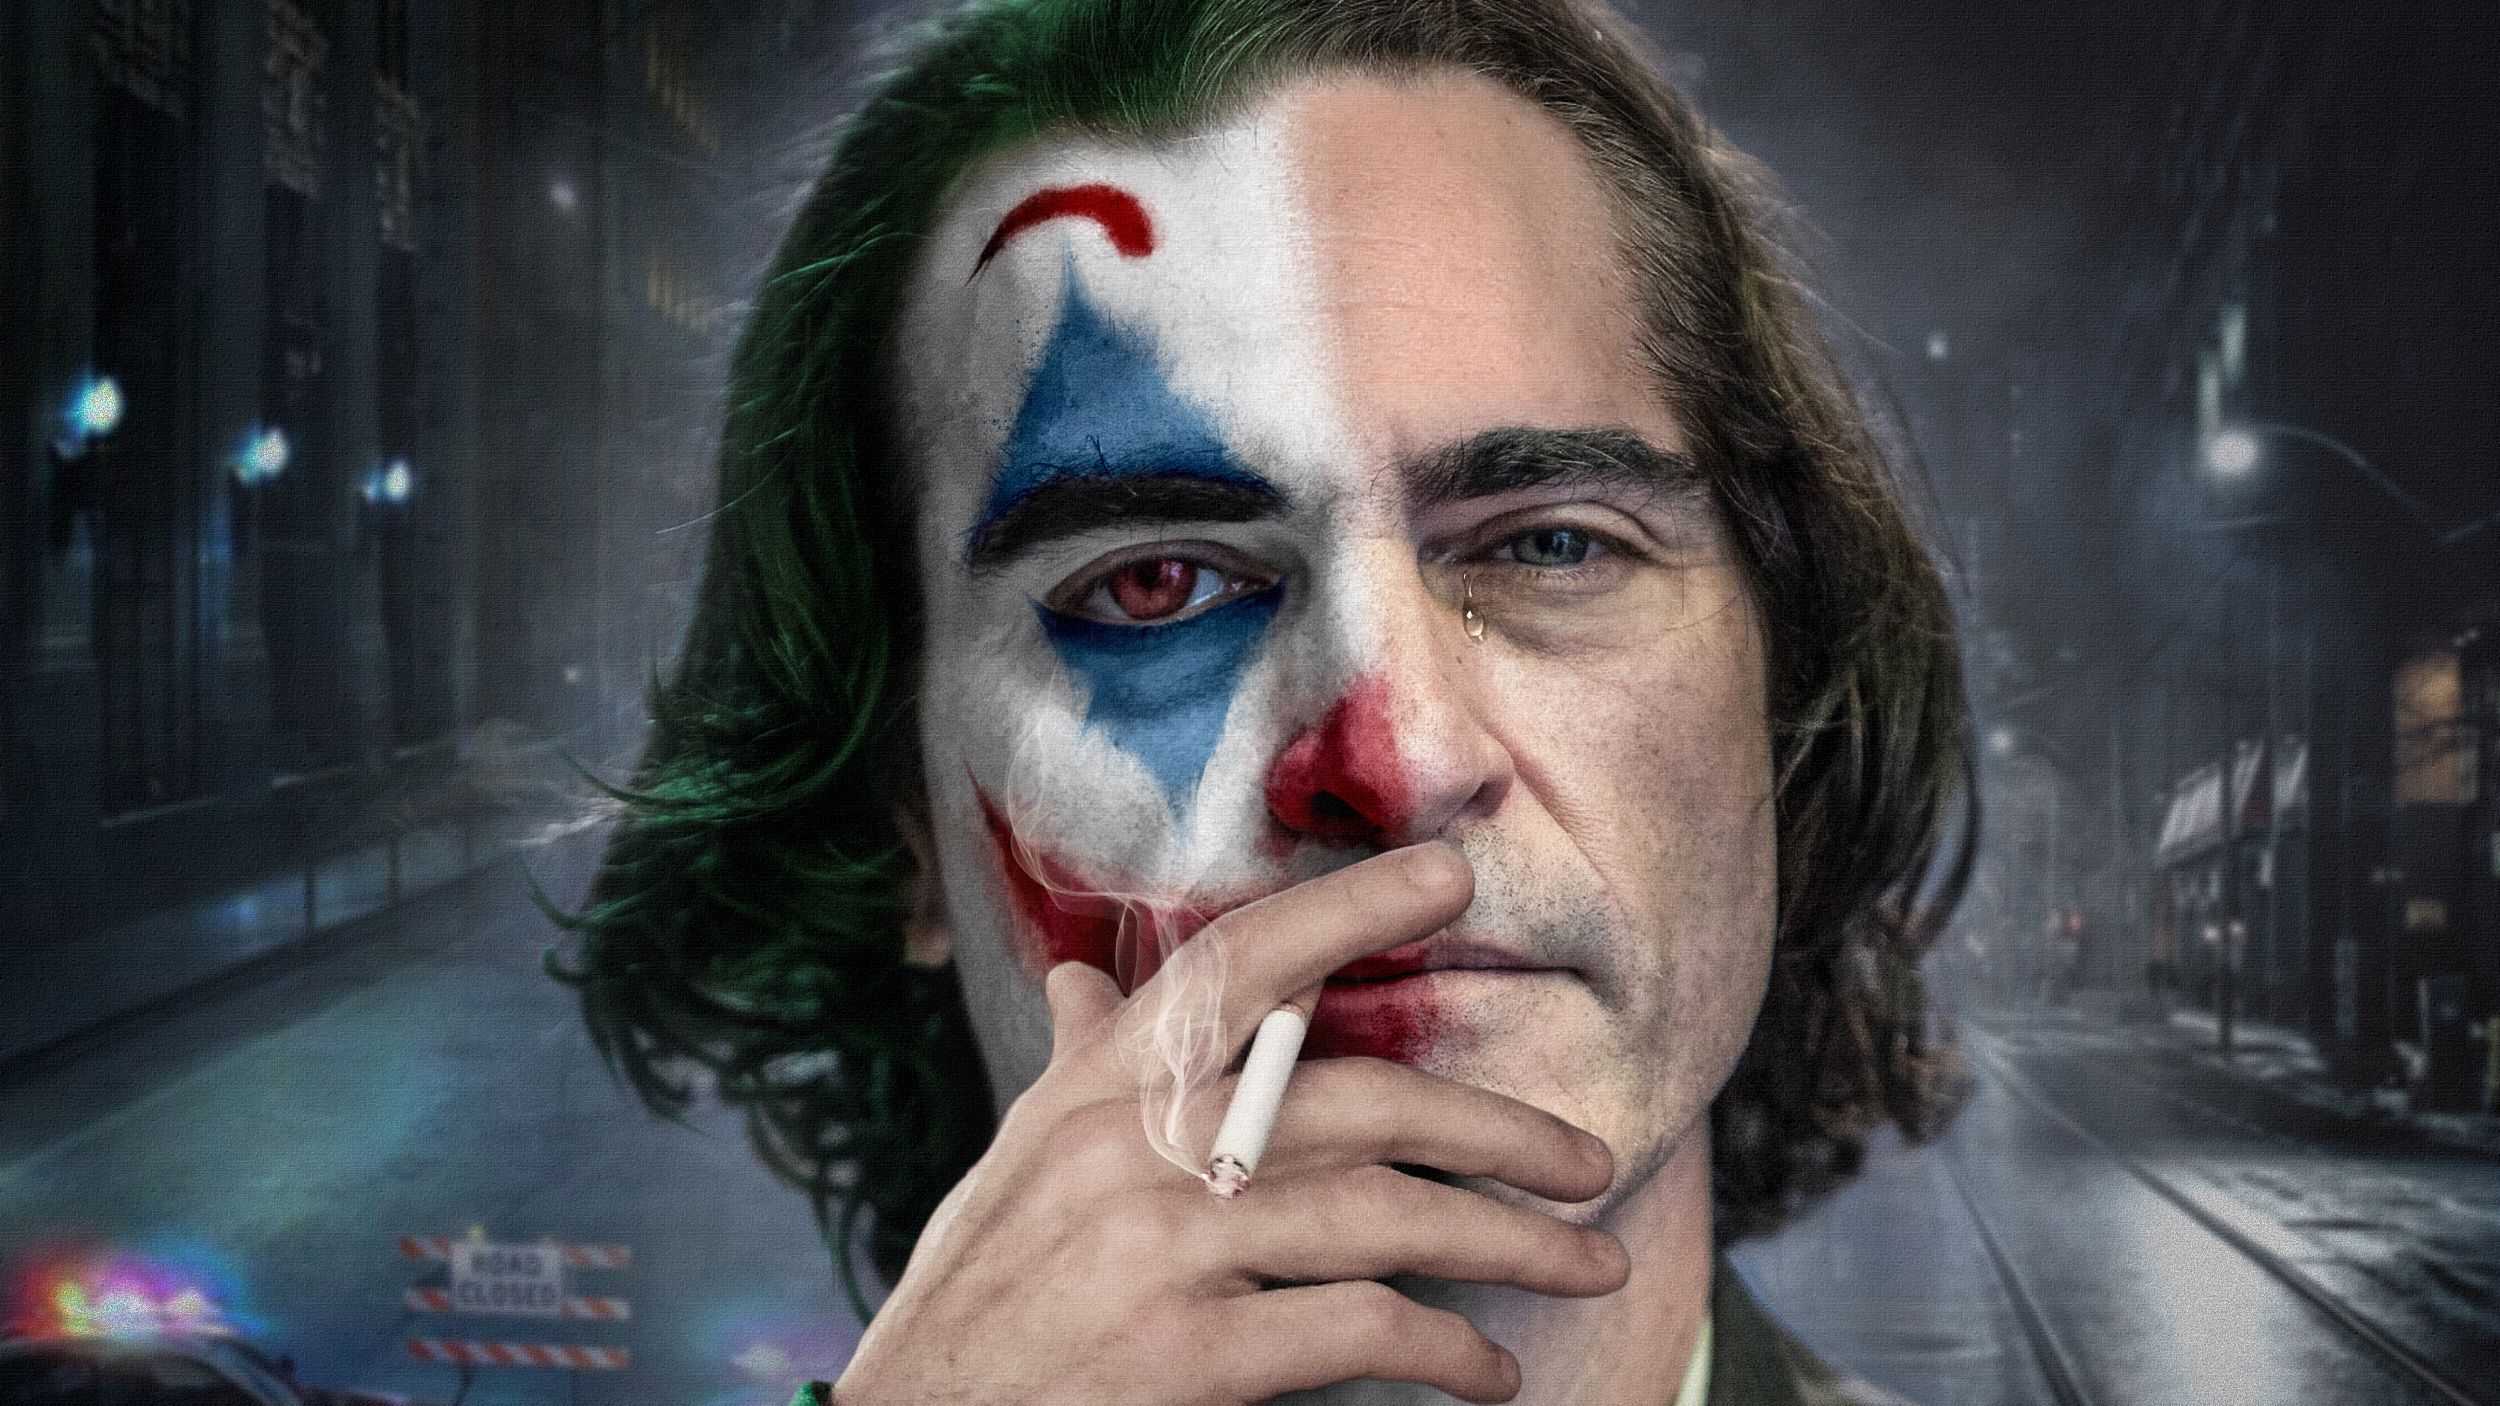 Joker Two Face Artwork, HD Superheroes, 4k Wallpaper, Image